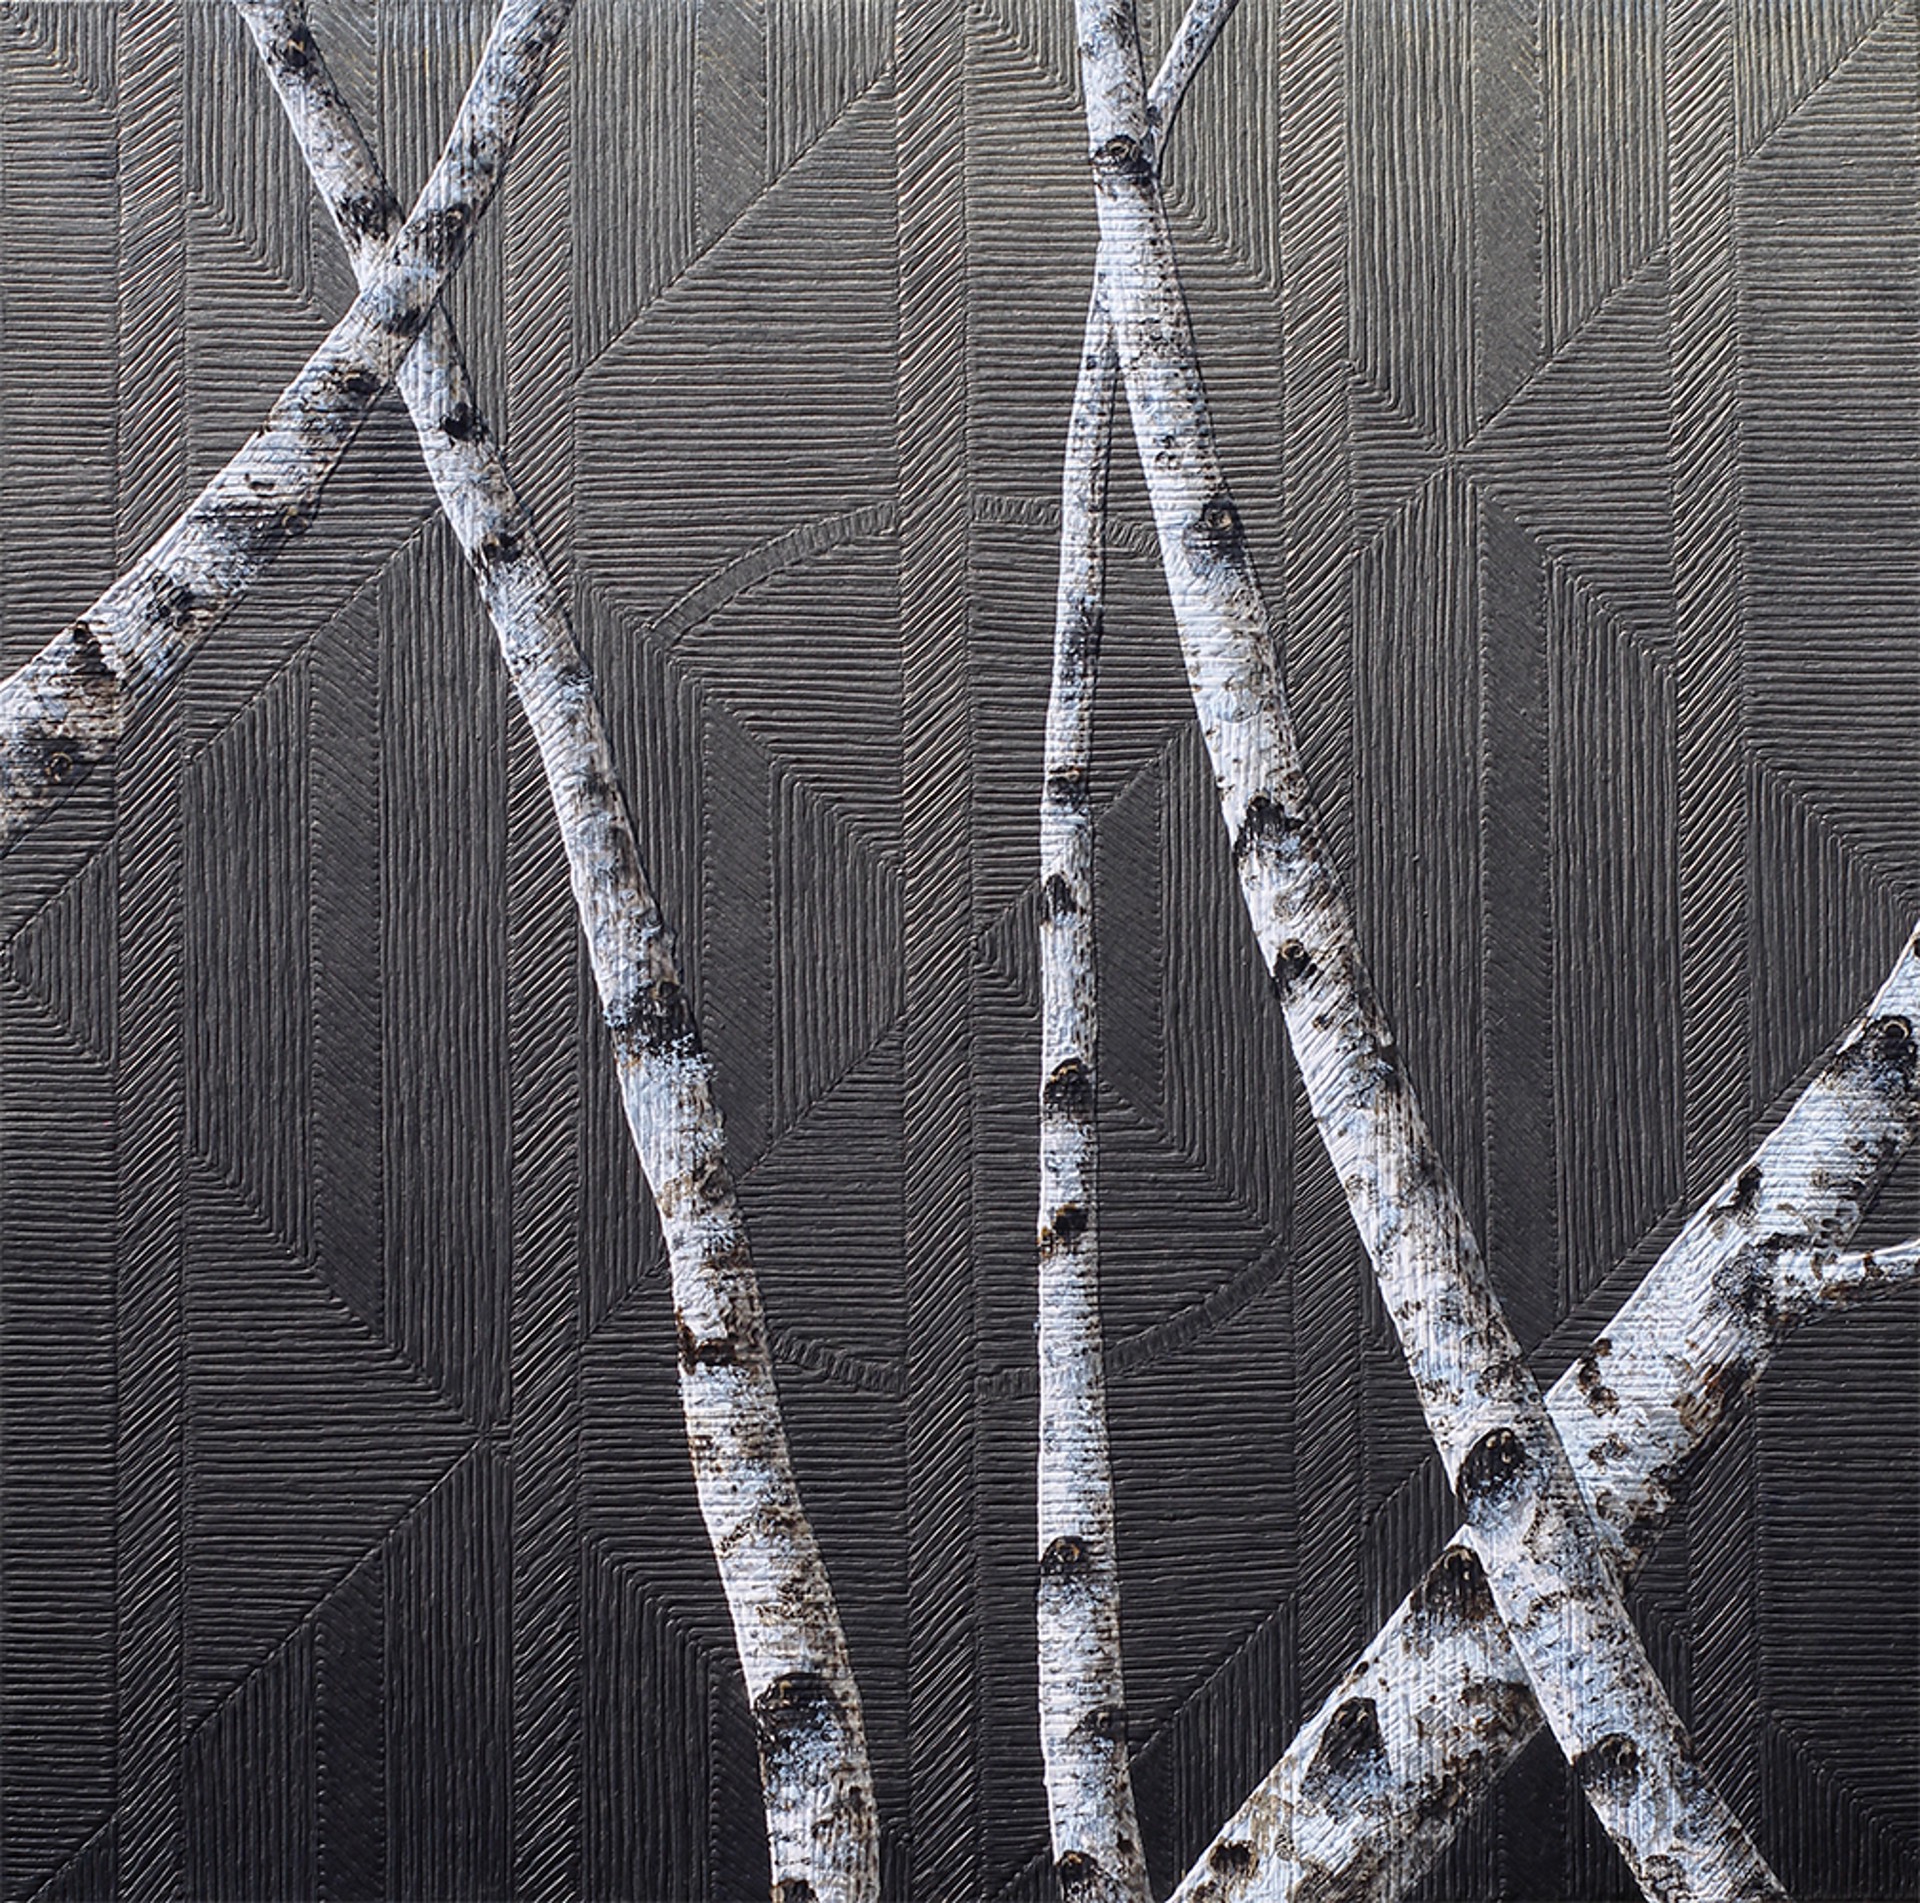 Birches I by Frank Faulkner